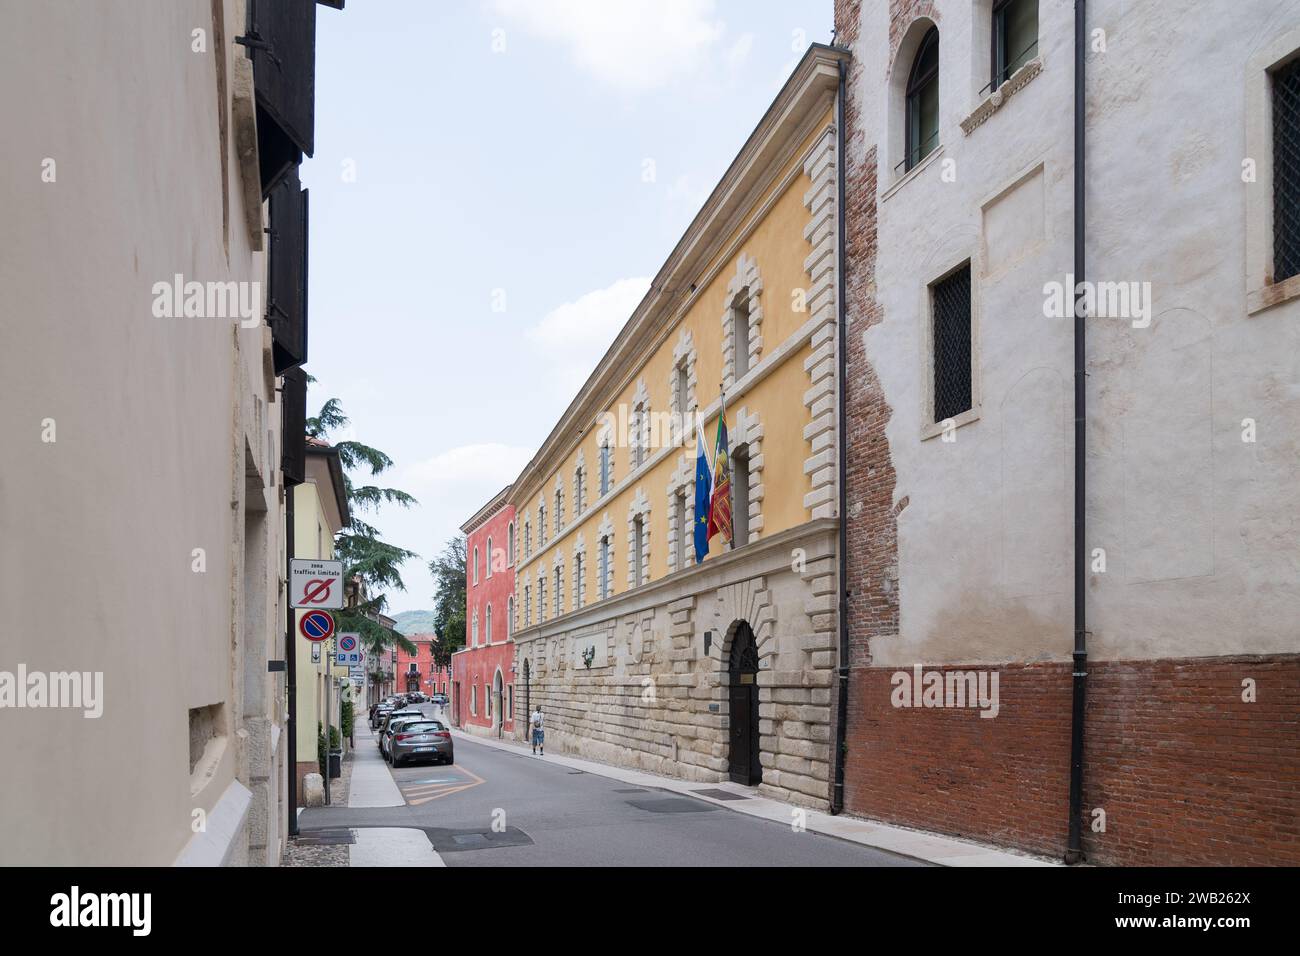 Palazzo Moscardo built in XVIII century in historic centre of Soave, Province of Verona, Veneto, Italy© Wojciech Strozyk / Alamy Stock Photo *** Local Stock Photo